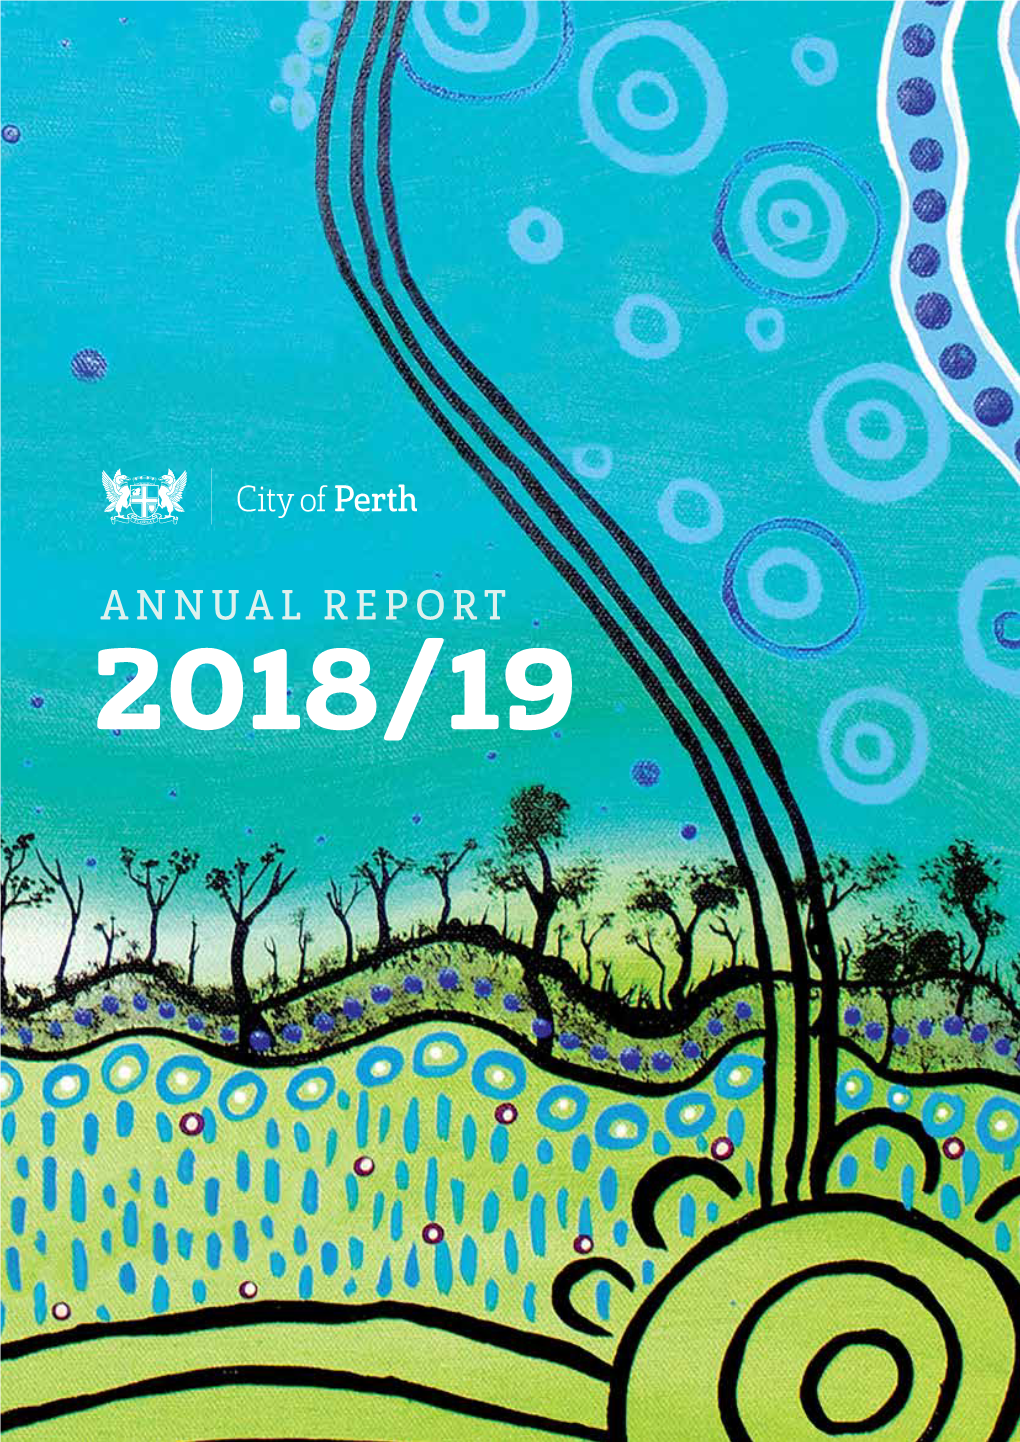 Annual Report 2018/19 2 3